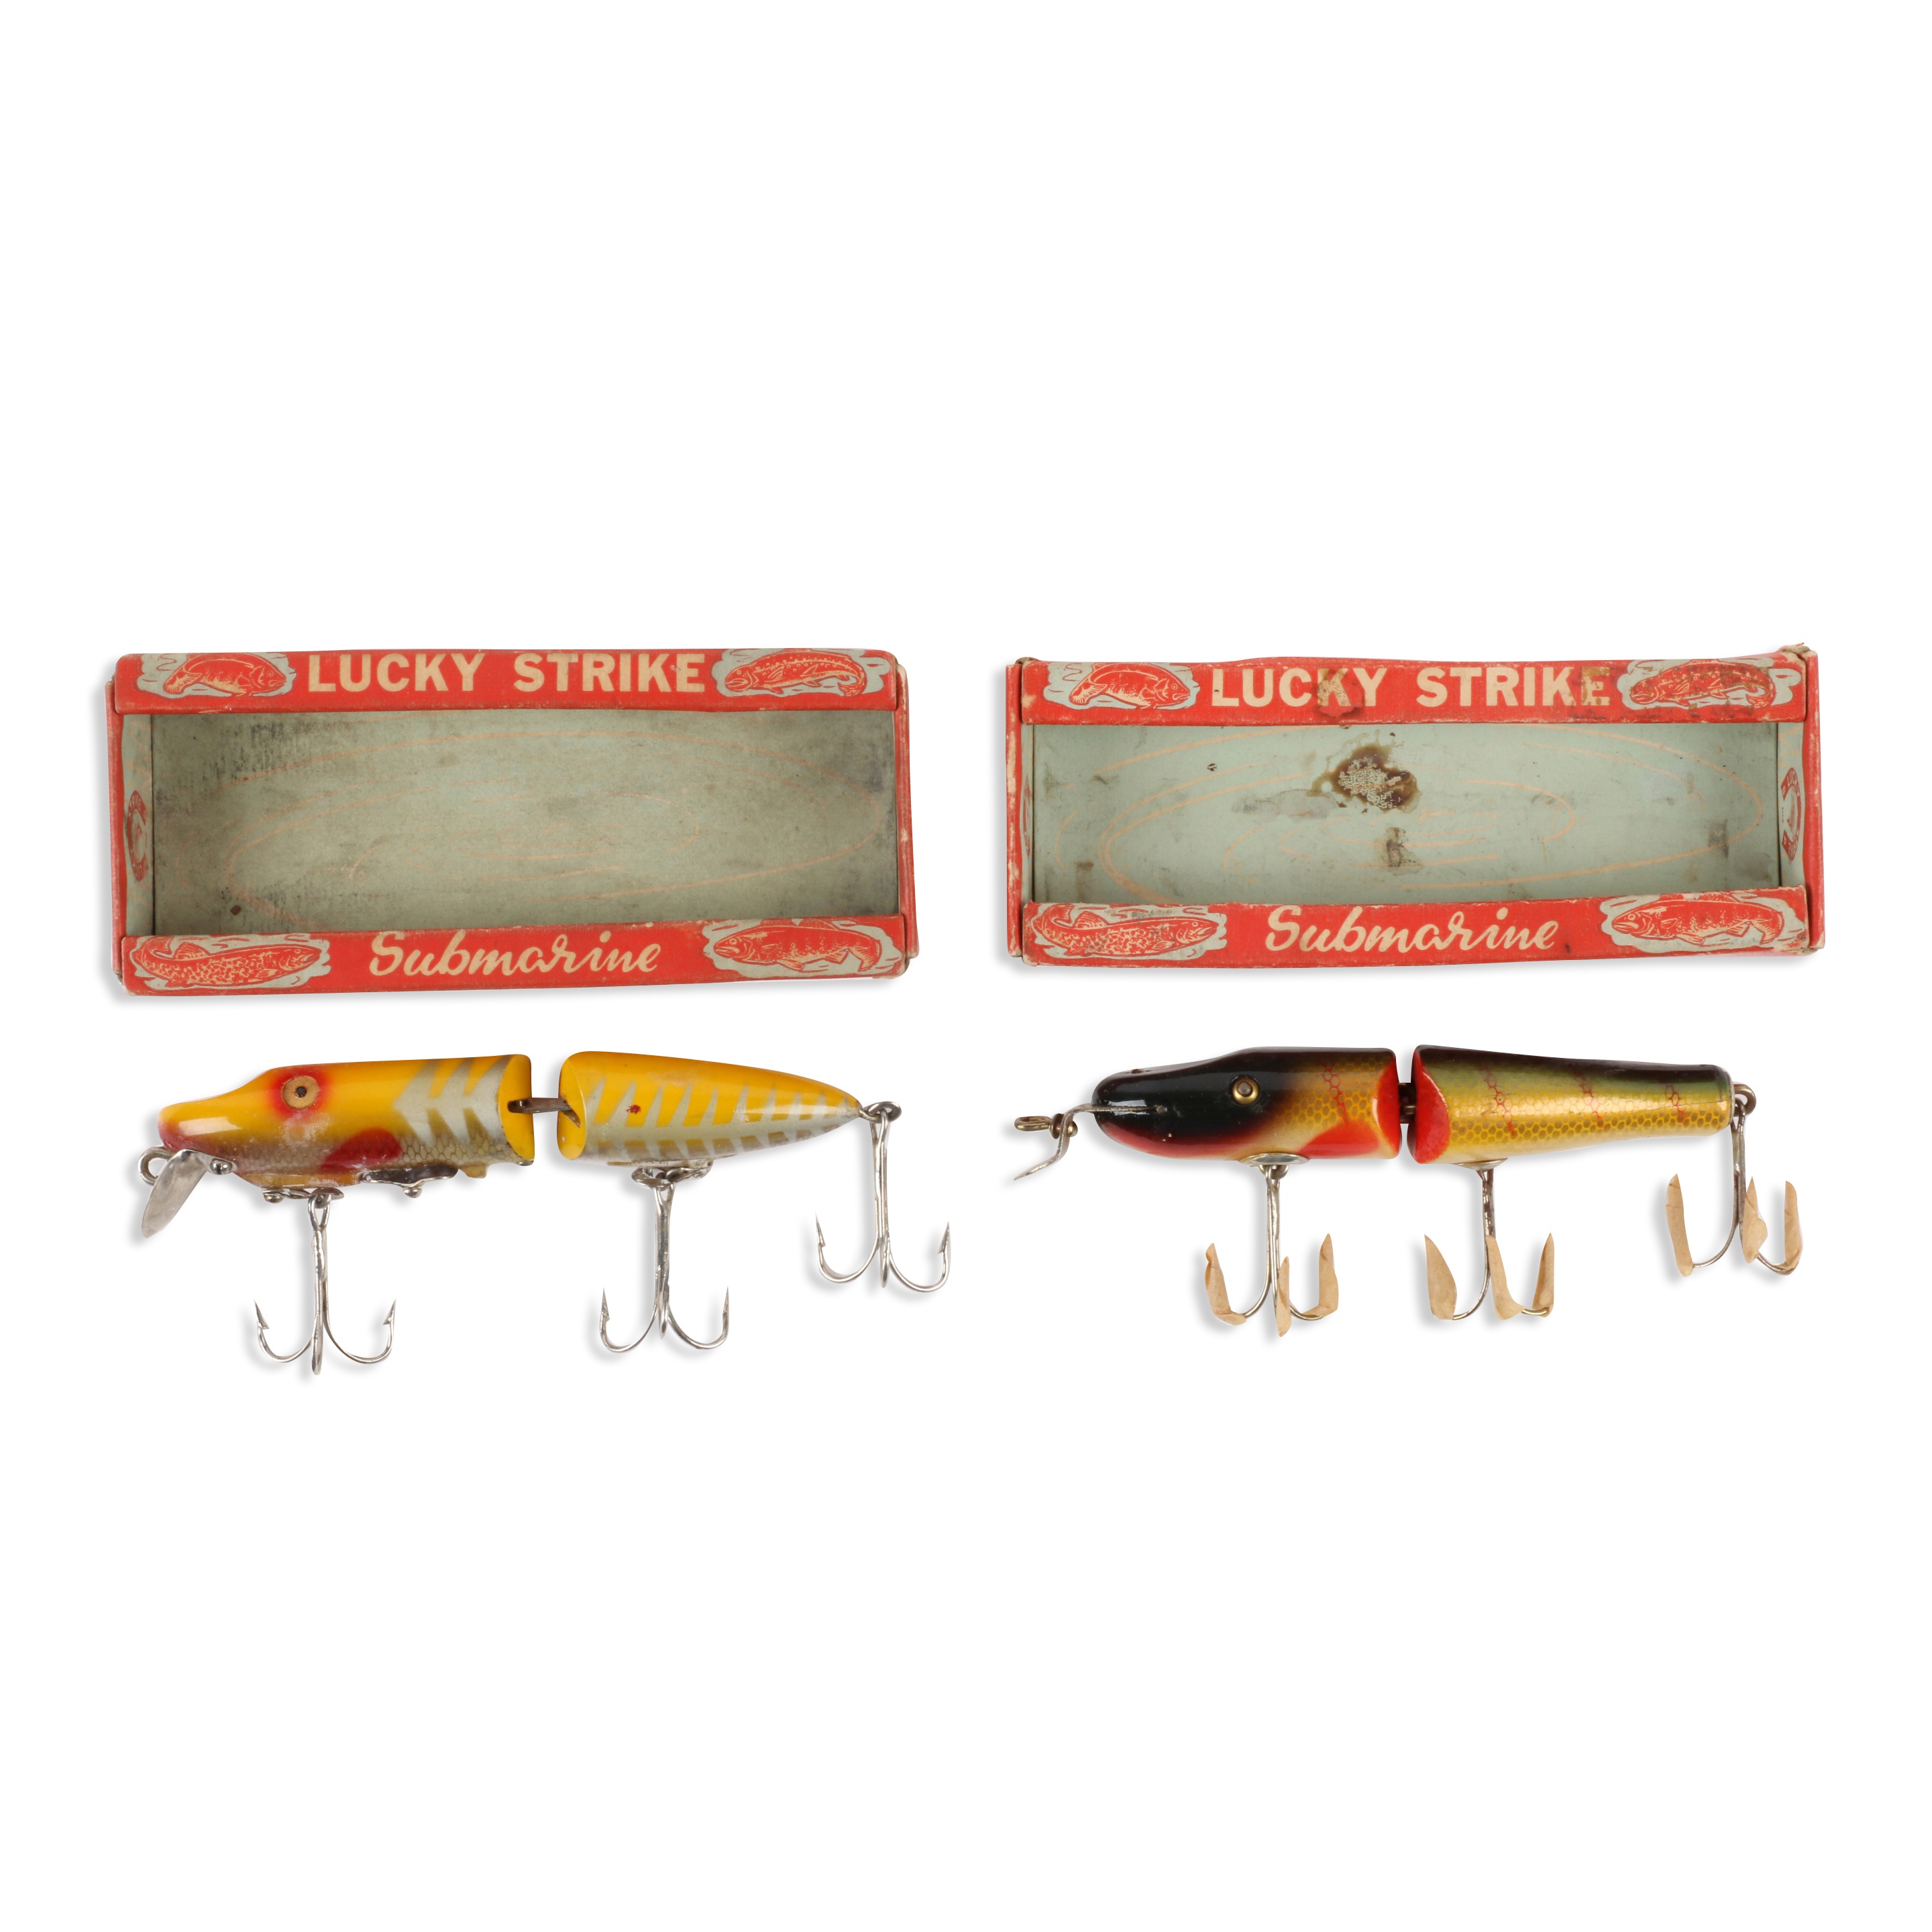 Lucky Strike Lures  Miller & Miller Auctions Ltd